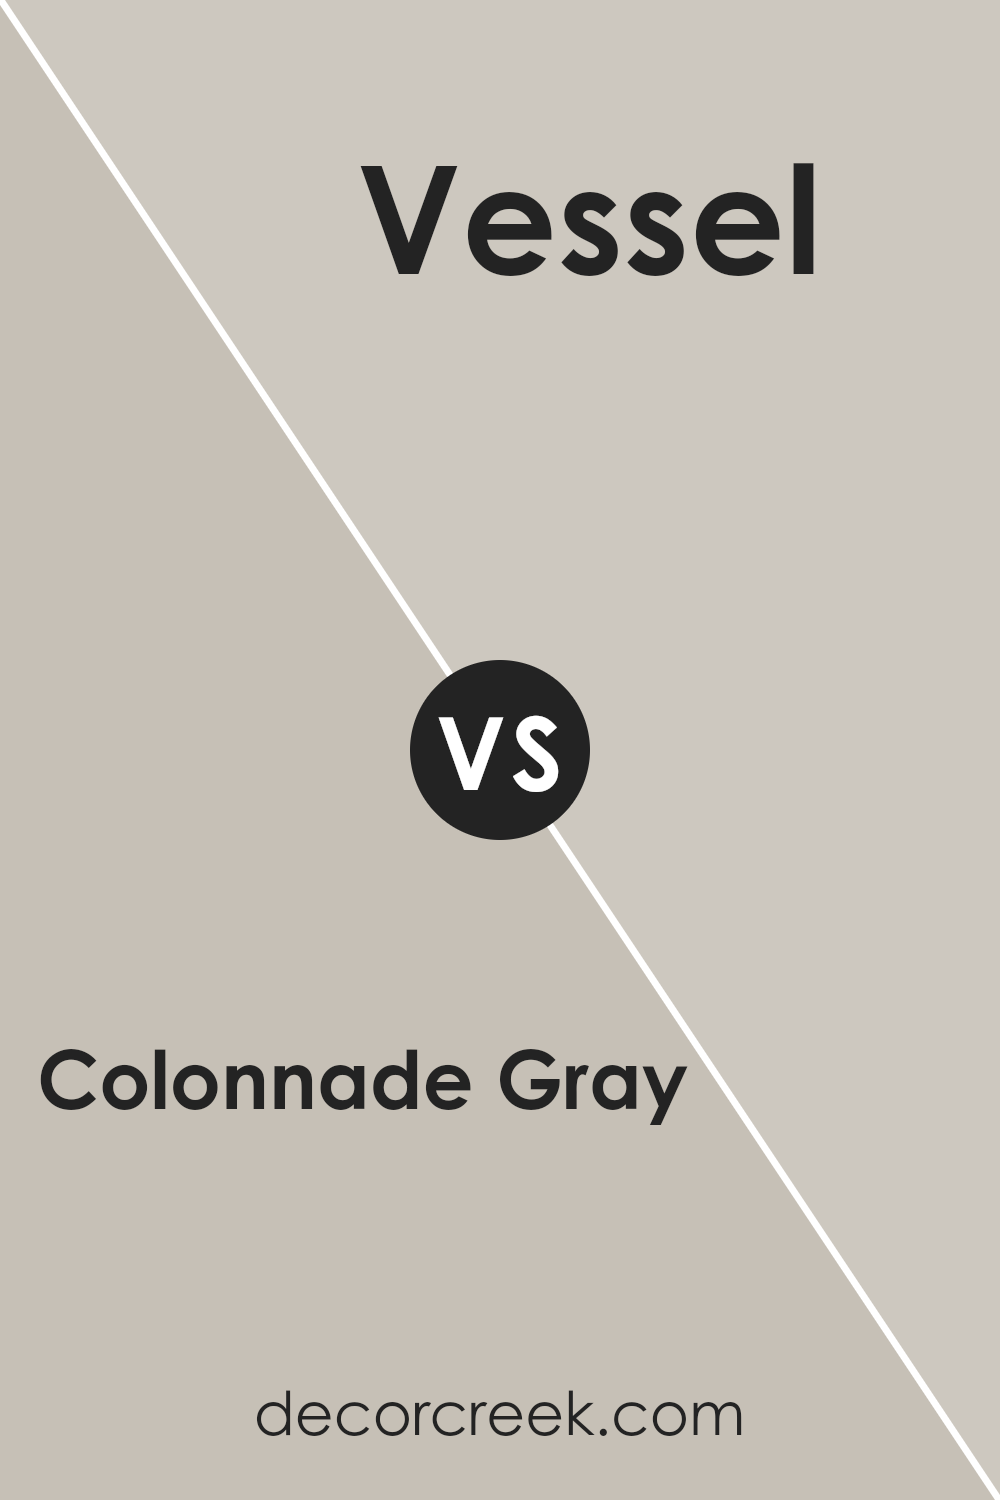 colonnade_gray_sw_7641_vs_vessel_sw_9547